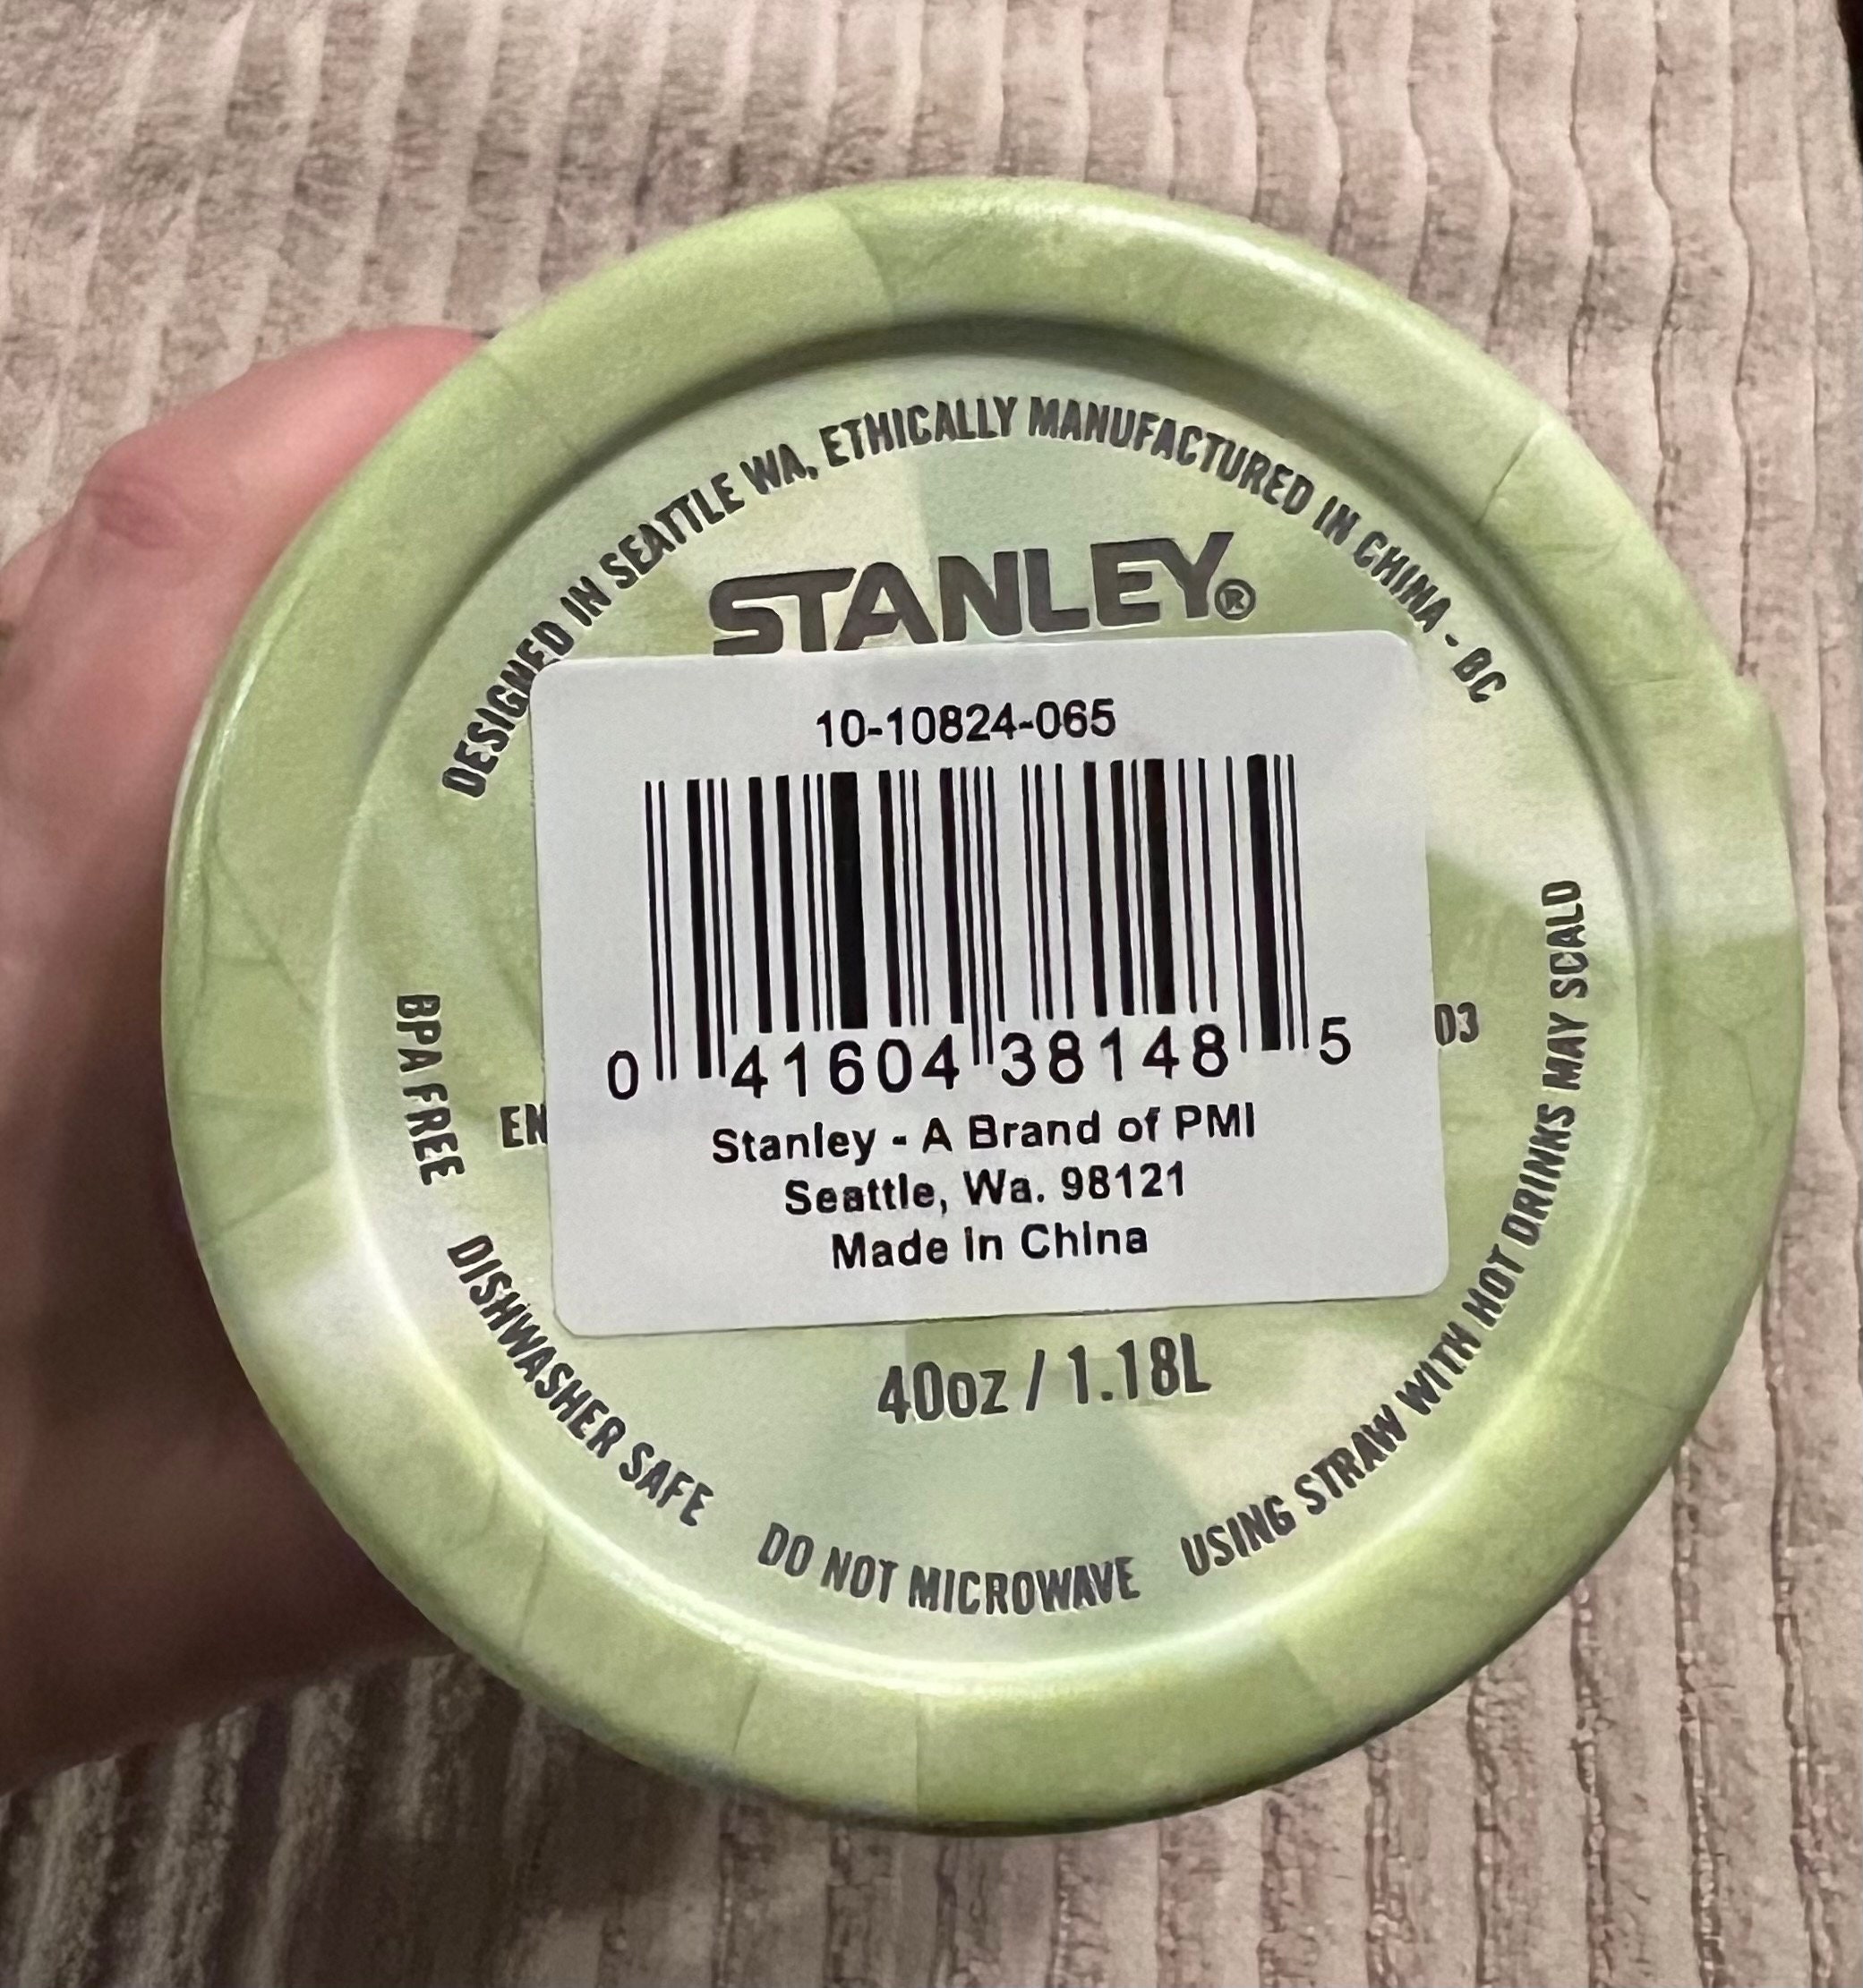 Stanley 40oz Target Exclusive Tie Dye HTF FREE KEYCHAIN Citron